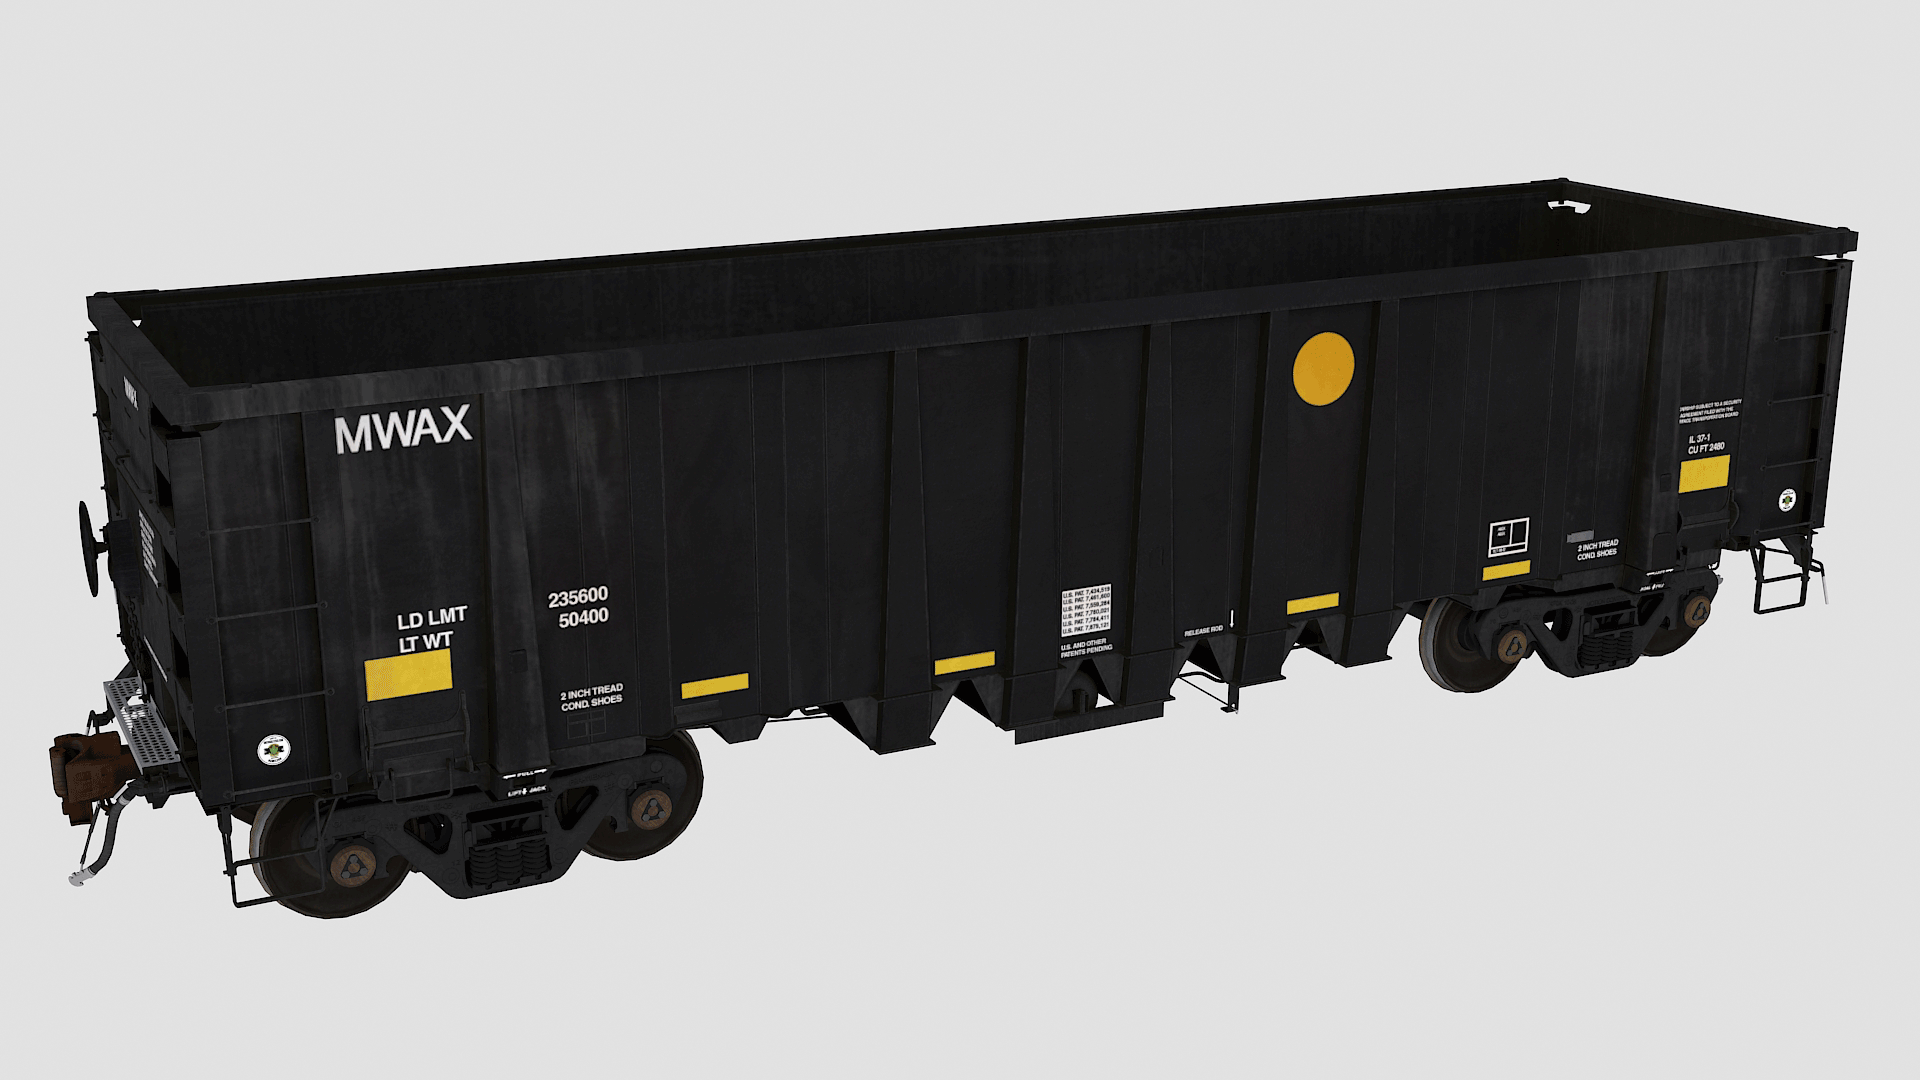 The mwax national steel car aggregate gondola